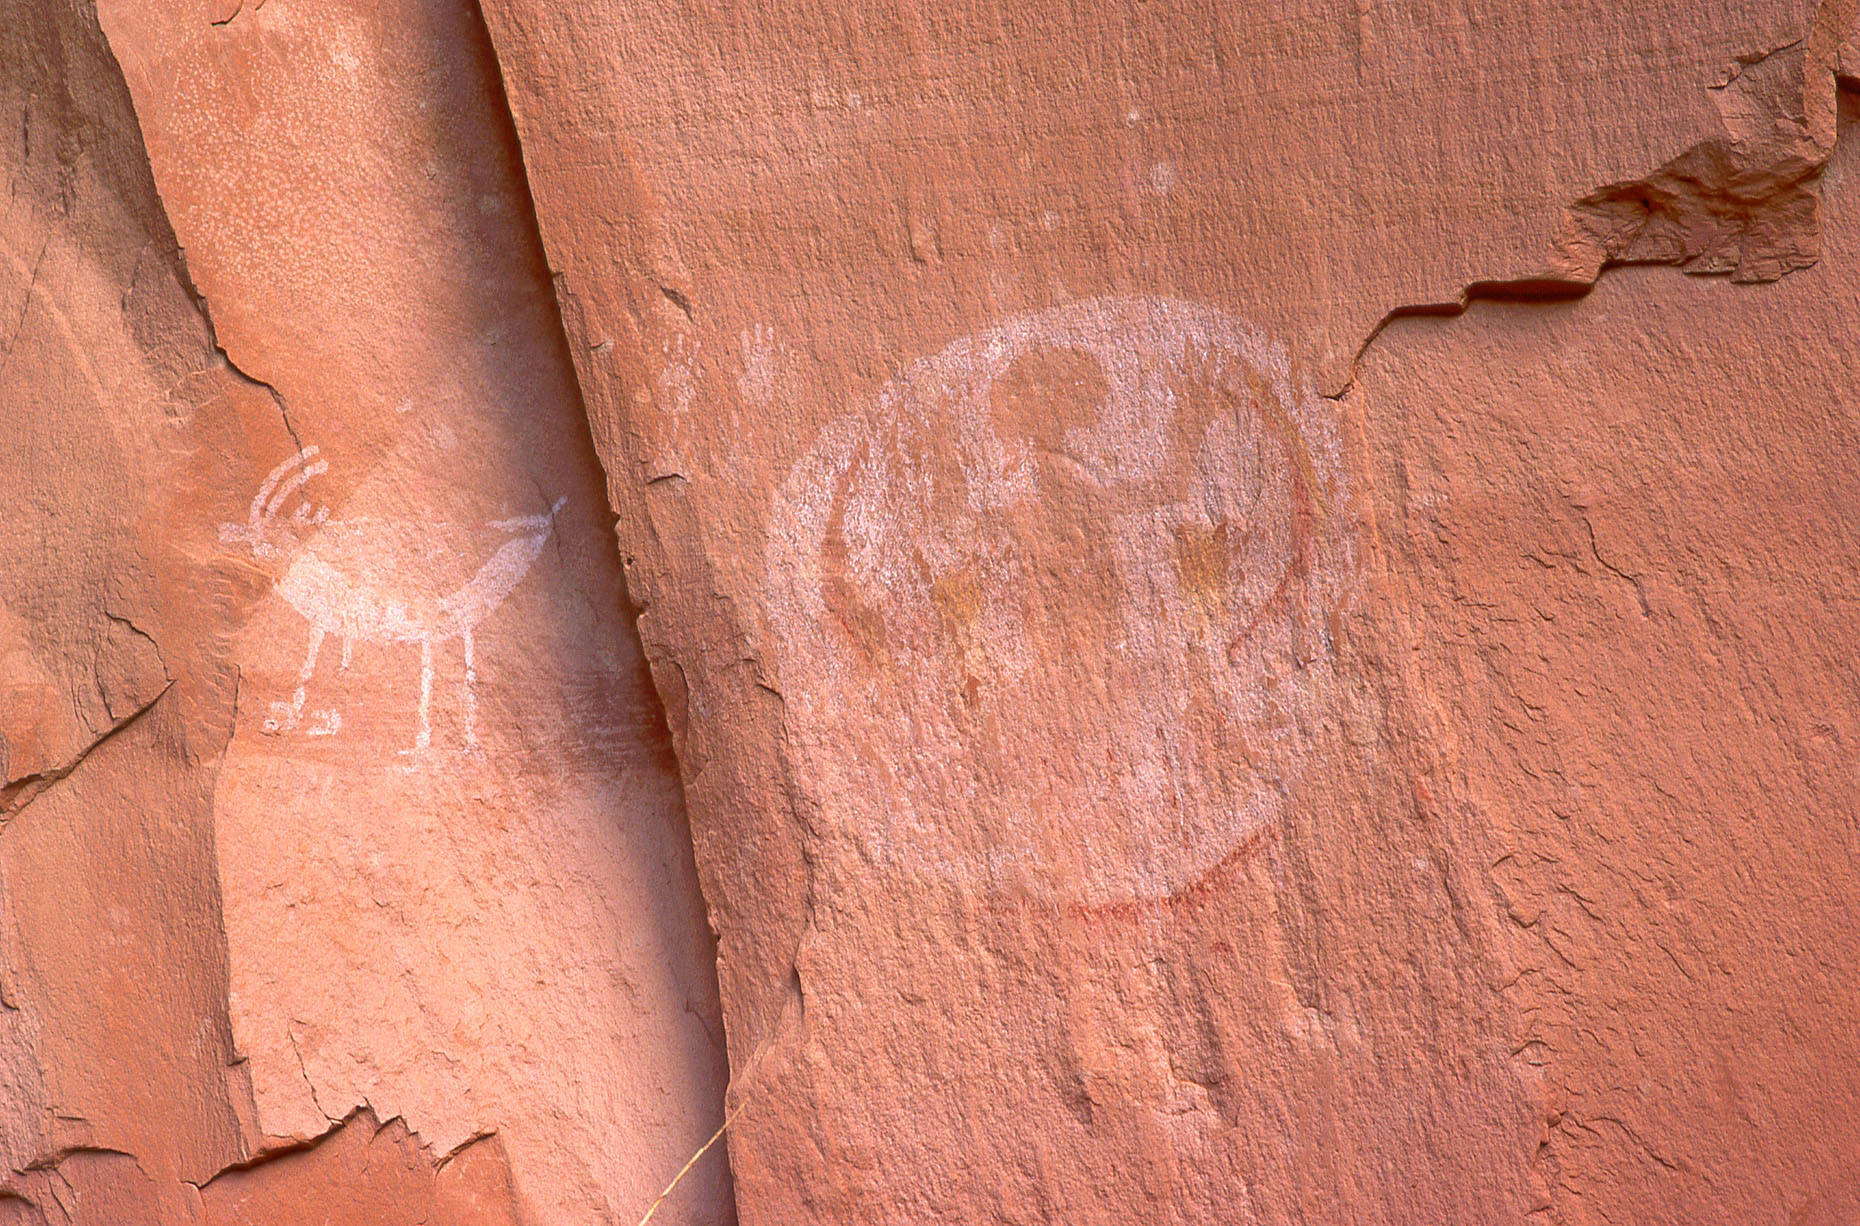 Kokopnyam, John Annerino, Hopi Fire Clan symbol, Navajo National Monument, AZ